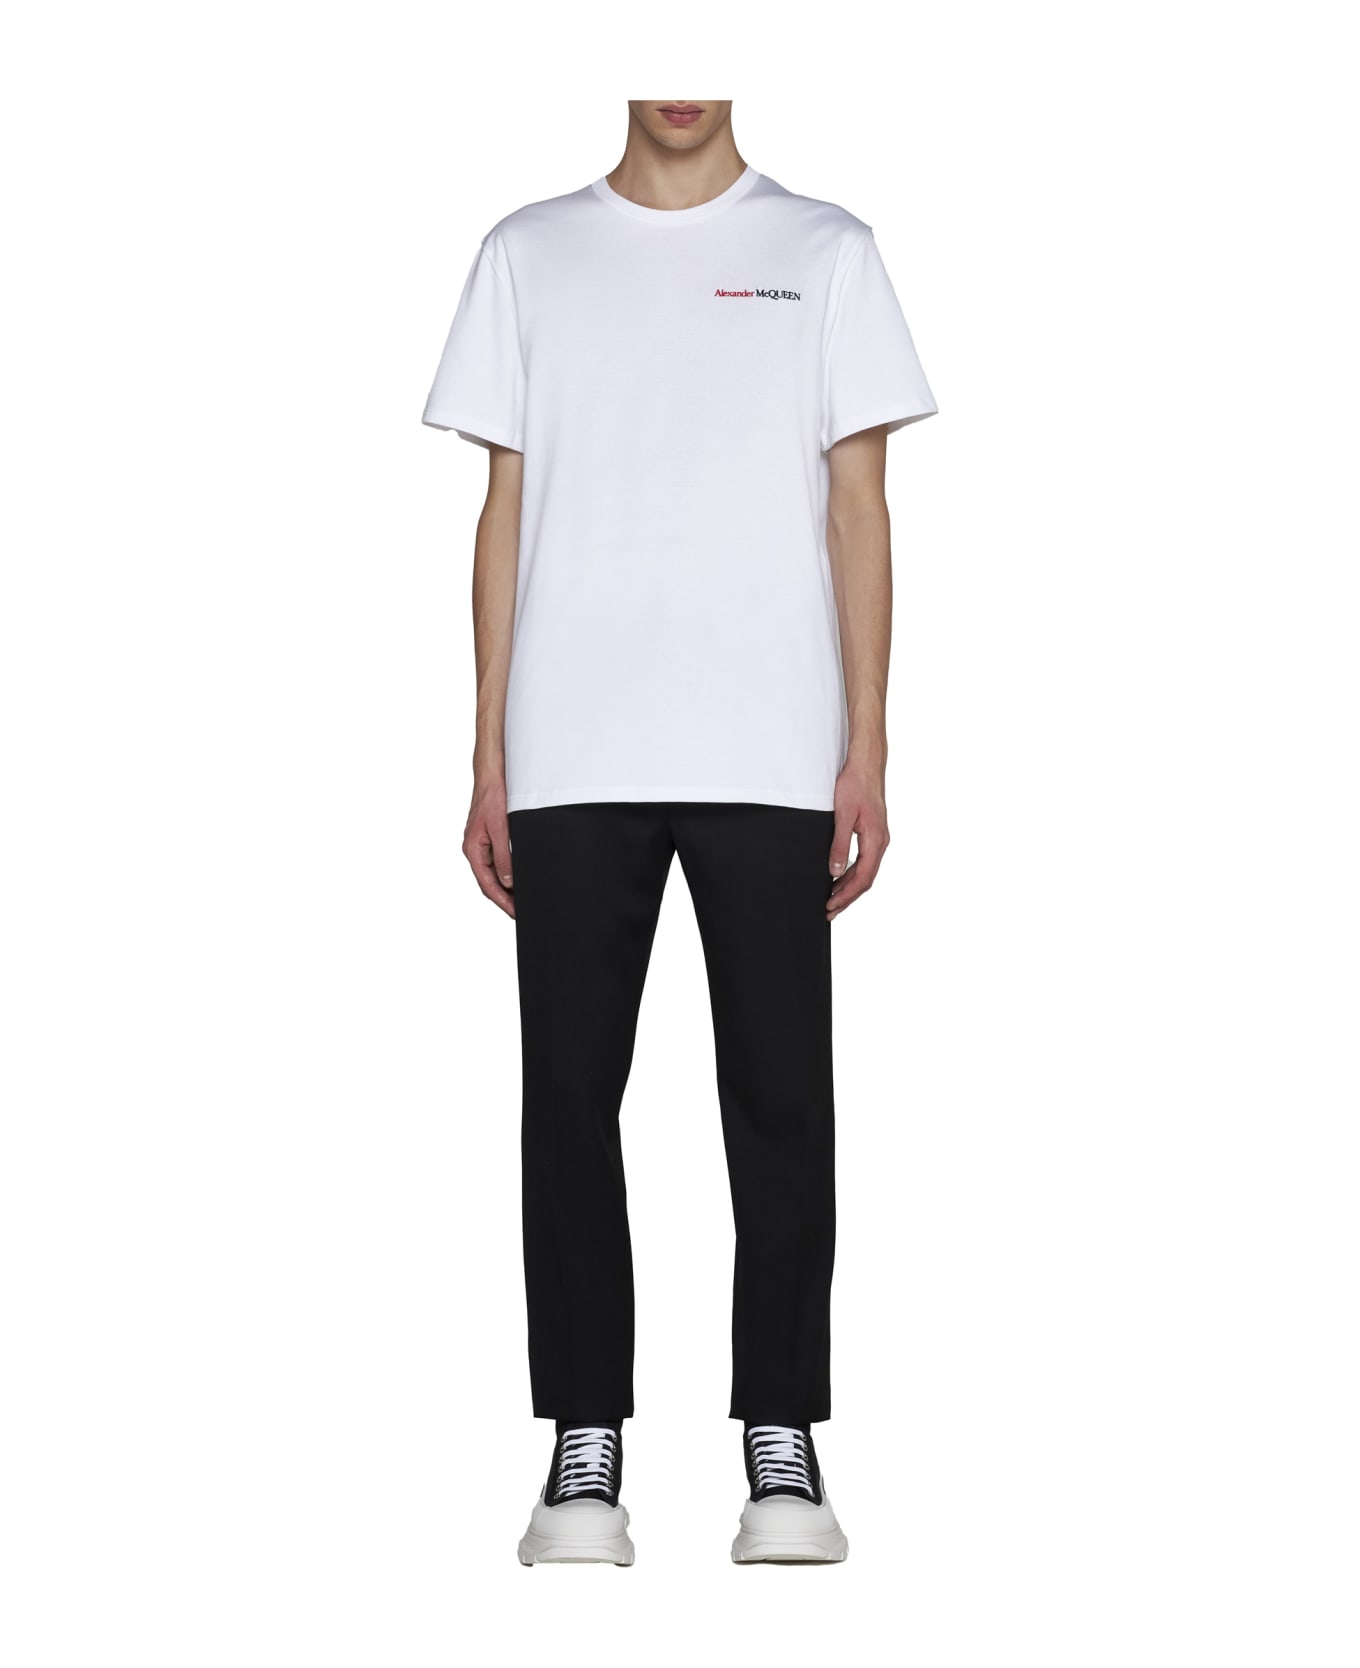 Alexander McQueen Logo Embroidery T-shirt - Opticalwhite シャツ